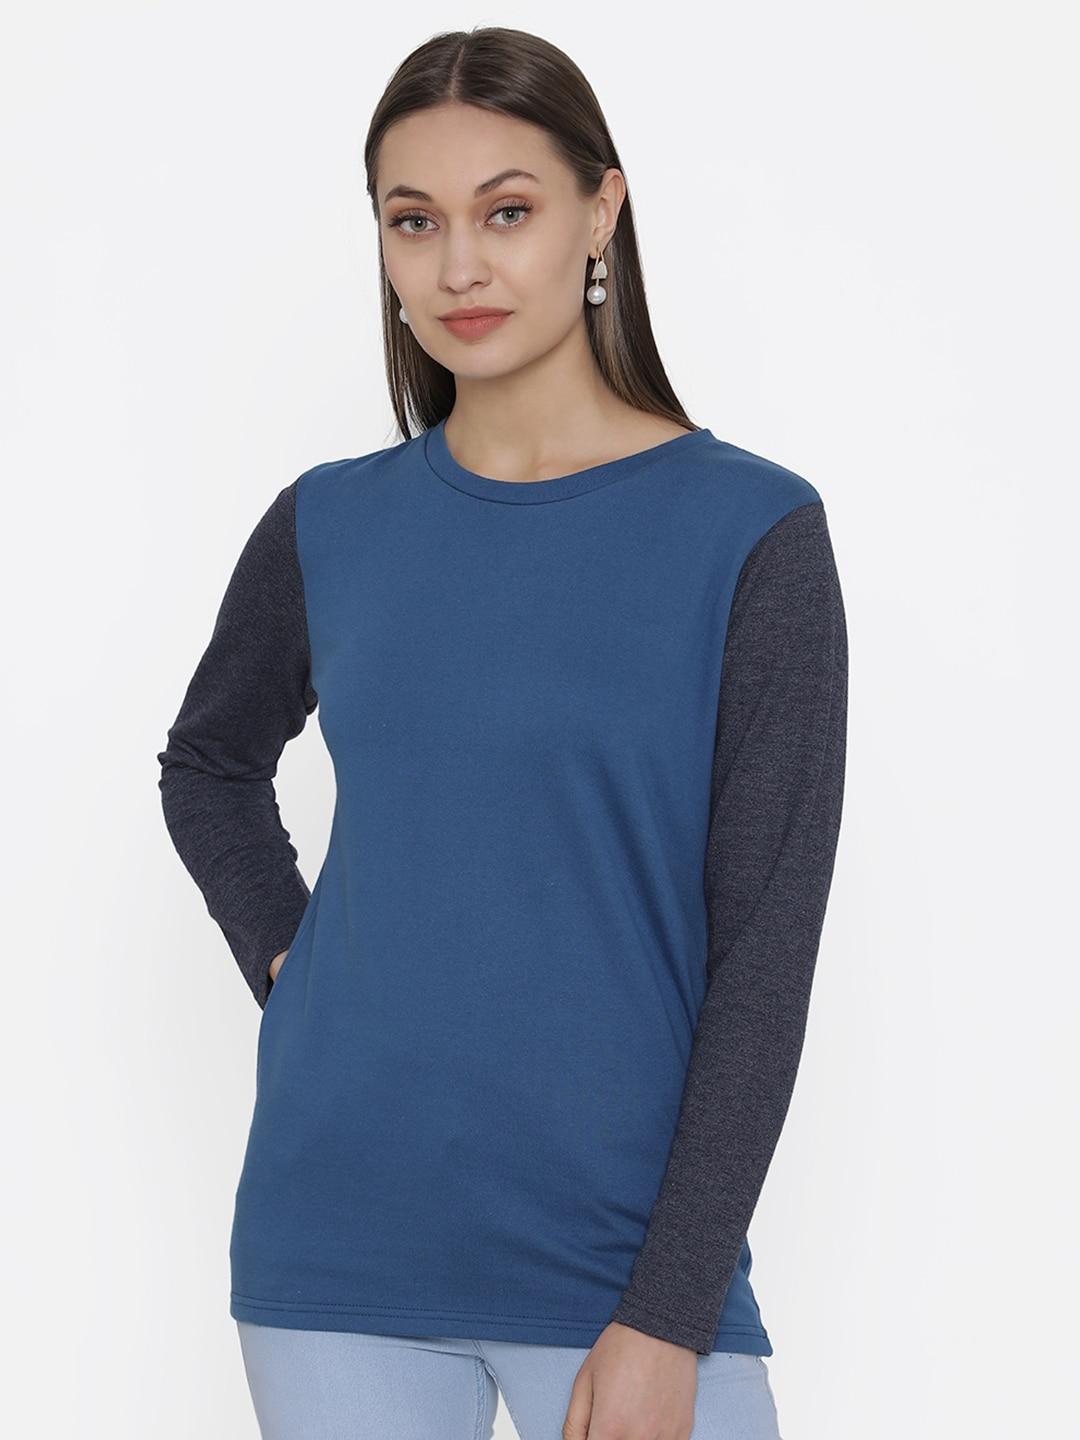 door74-women-blue-&-black-colourblocked-t-shirt